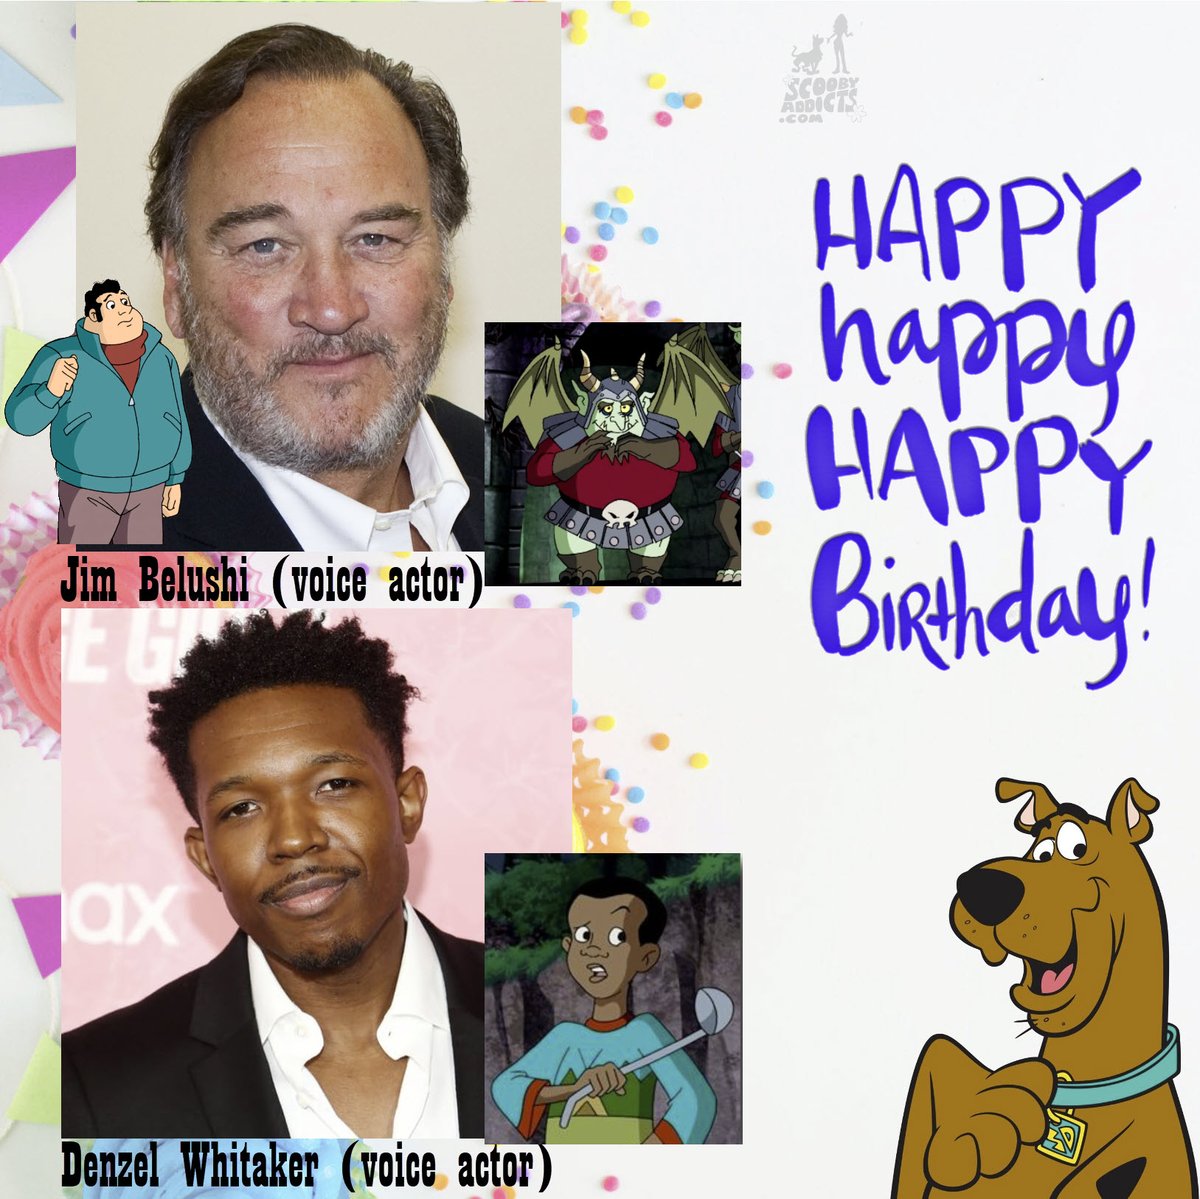 June 15 - #scoobydoohistory 

🎈HAPPY BIRTHDAY🎈

Jim Belushi
Denzel Whitaker

#ScoobyDoo

scoobyaddicts.com